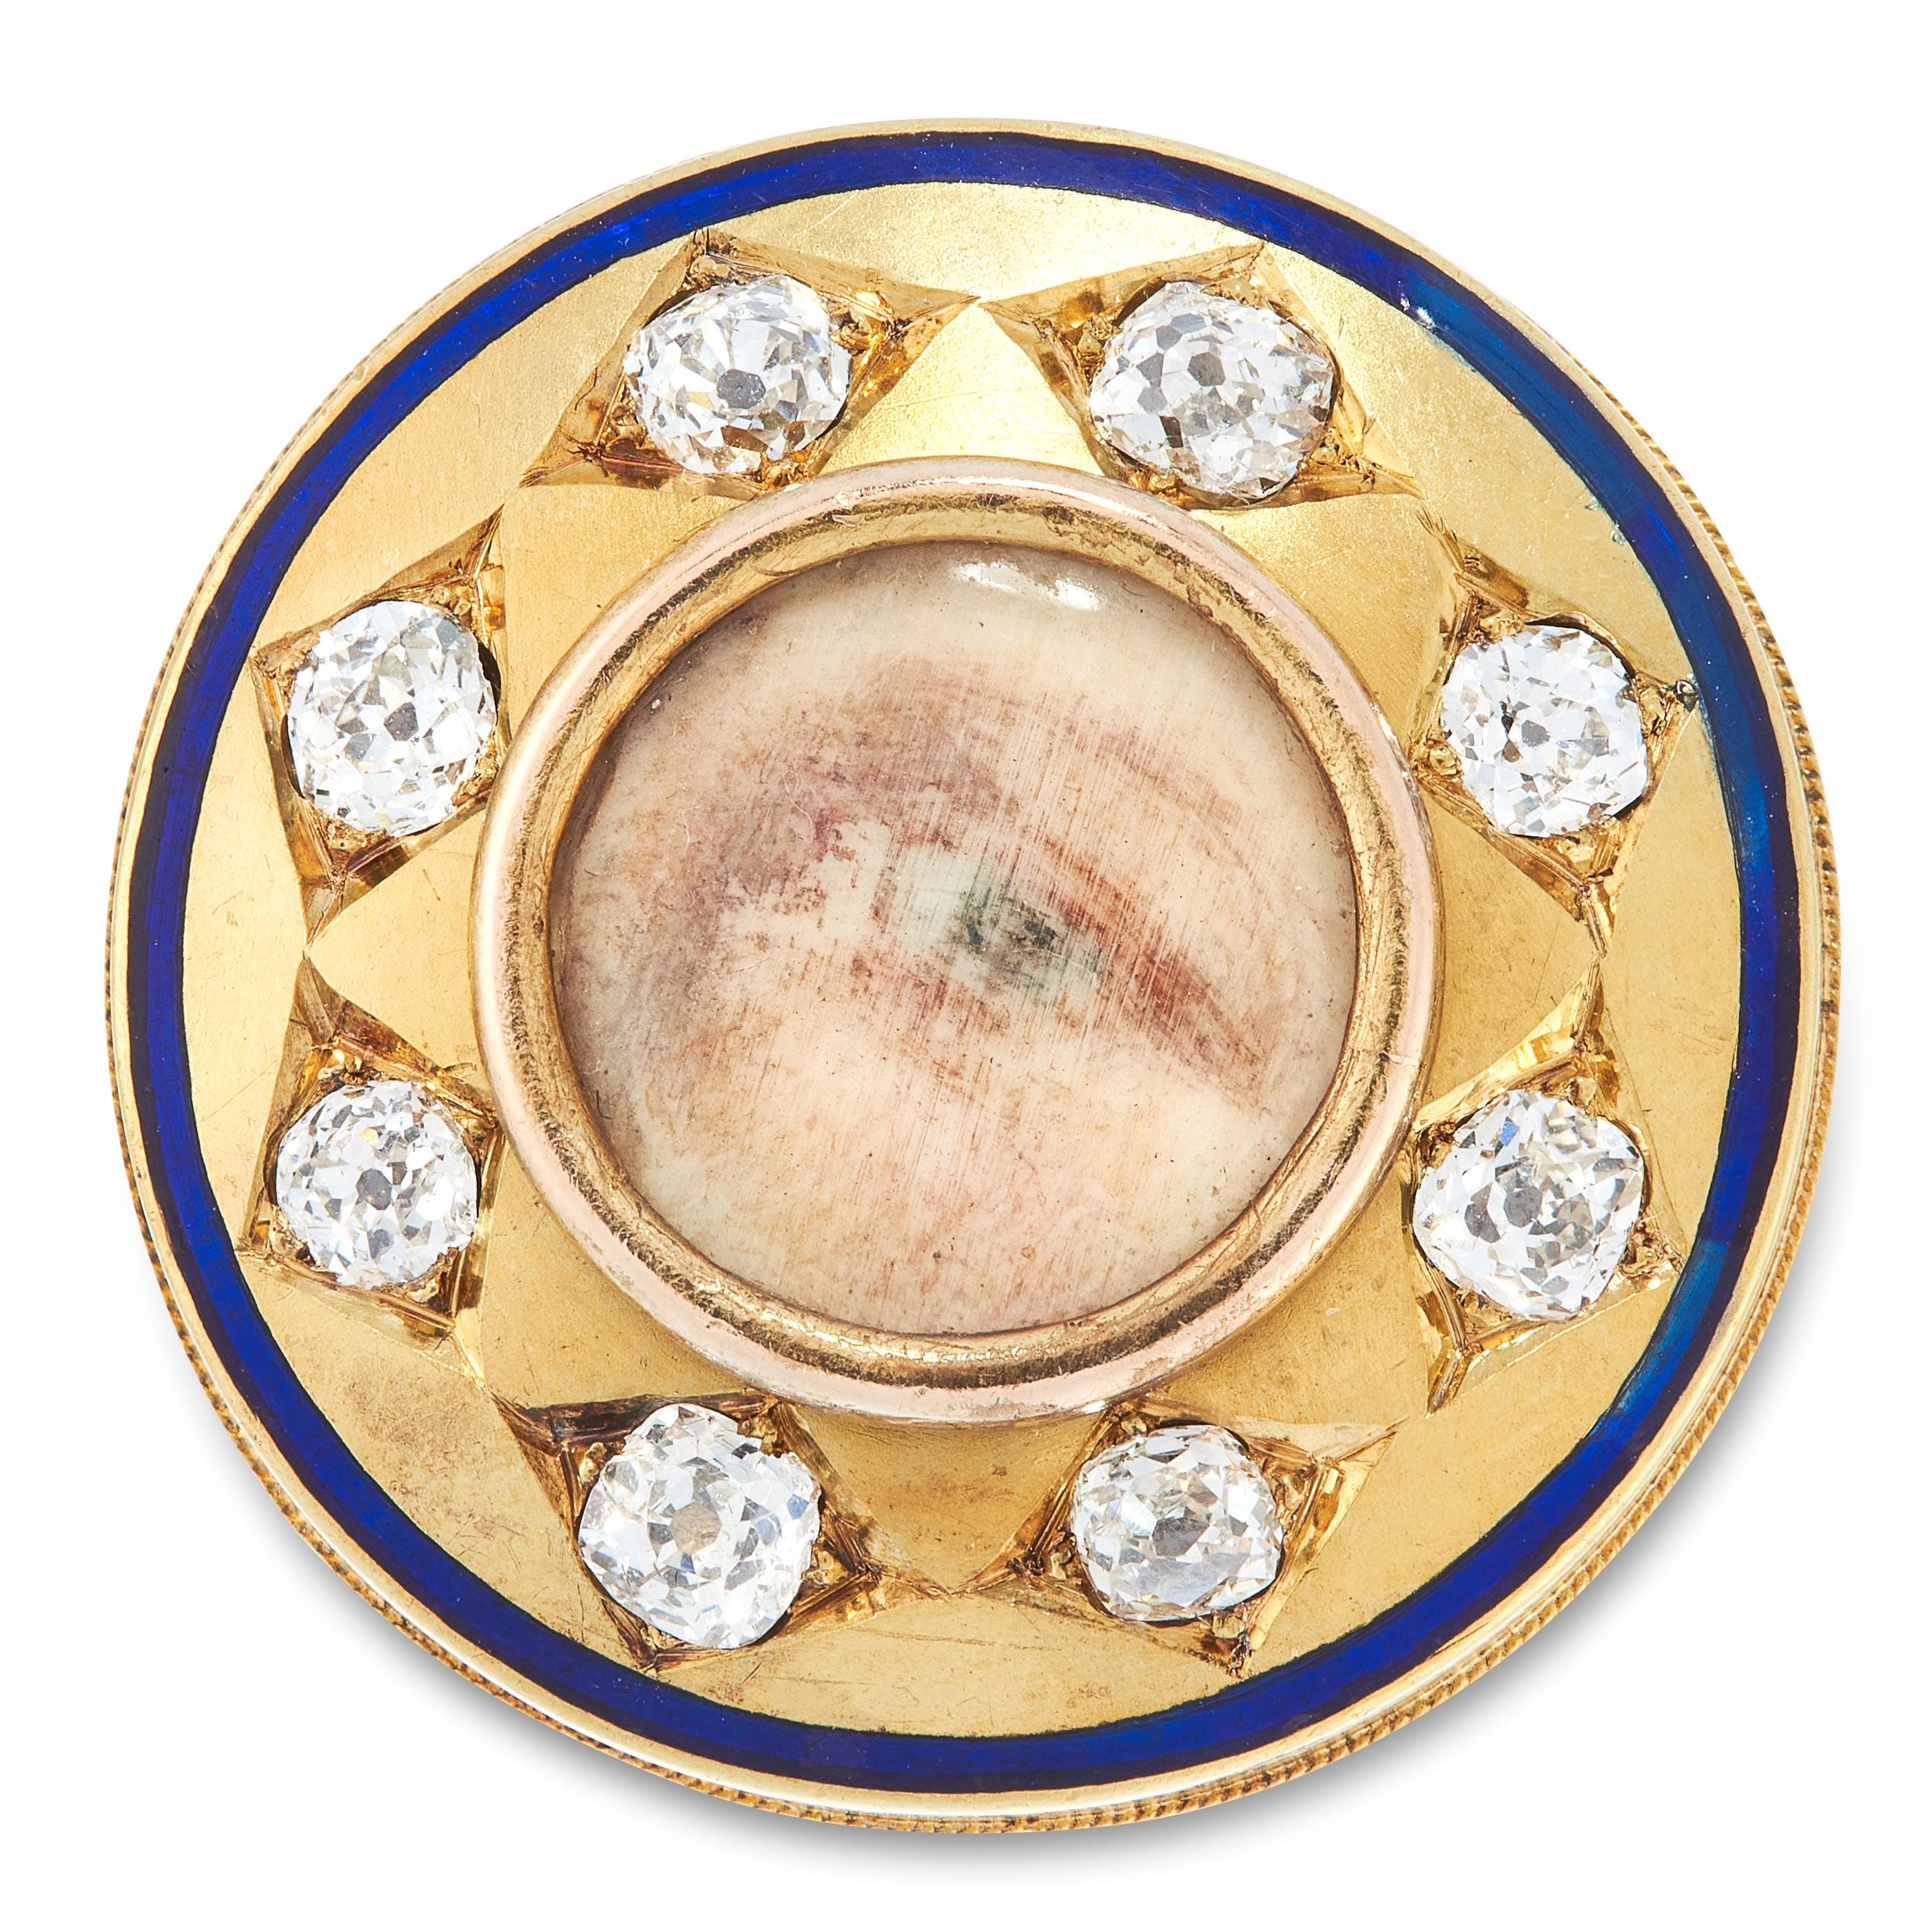 ANTIQUE PORTRAIT MINIATURE, DIAMOND AND ENAMEL MOURNING LOCKET RING, 19TH CENTURY in high carat